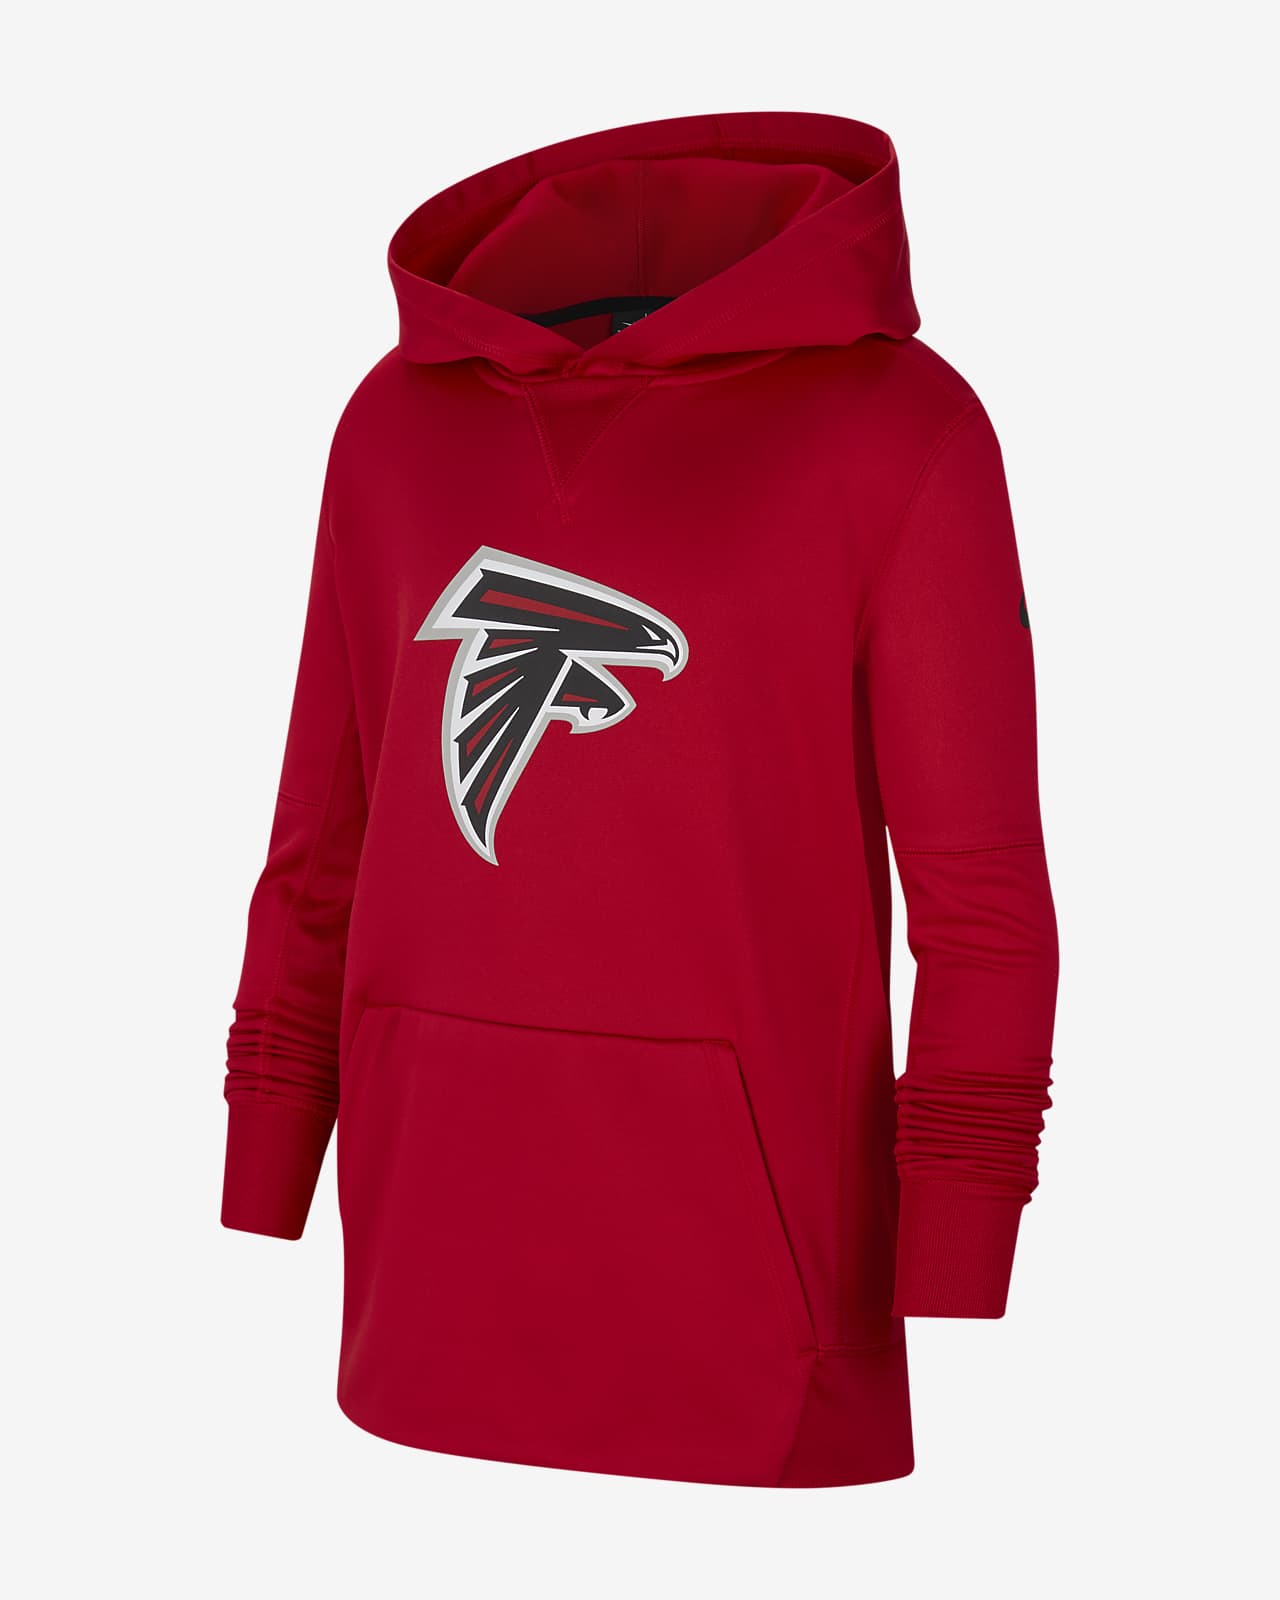 Nike (NFL Falcons) Big Kids' Logo Hoodie